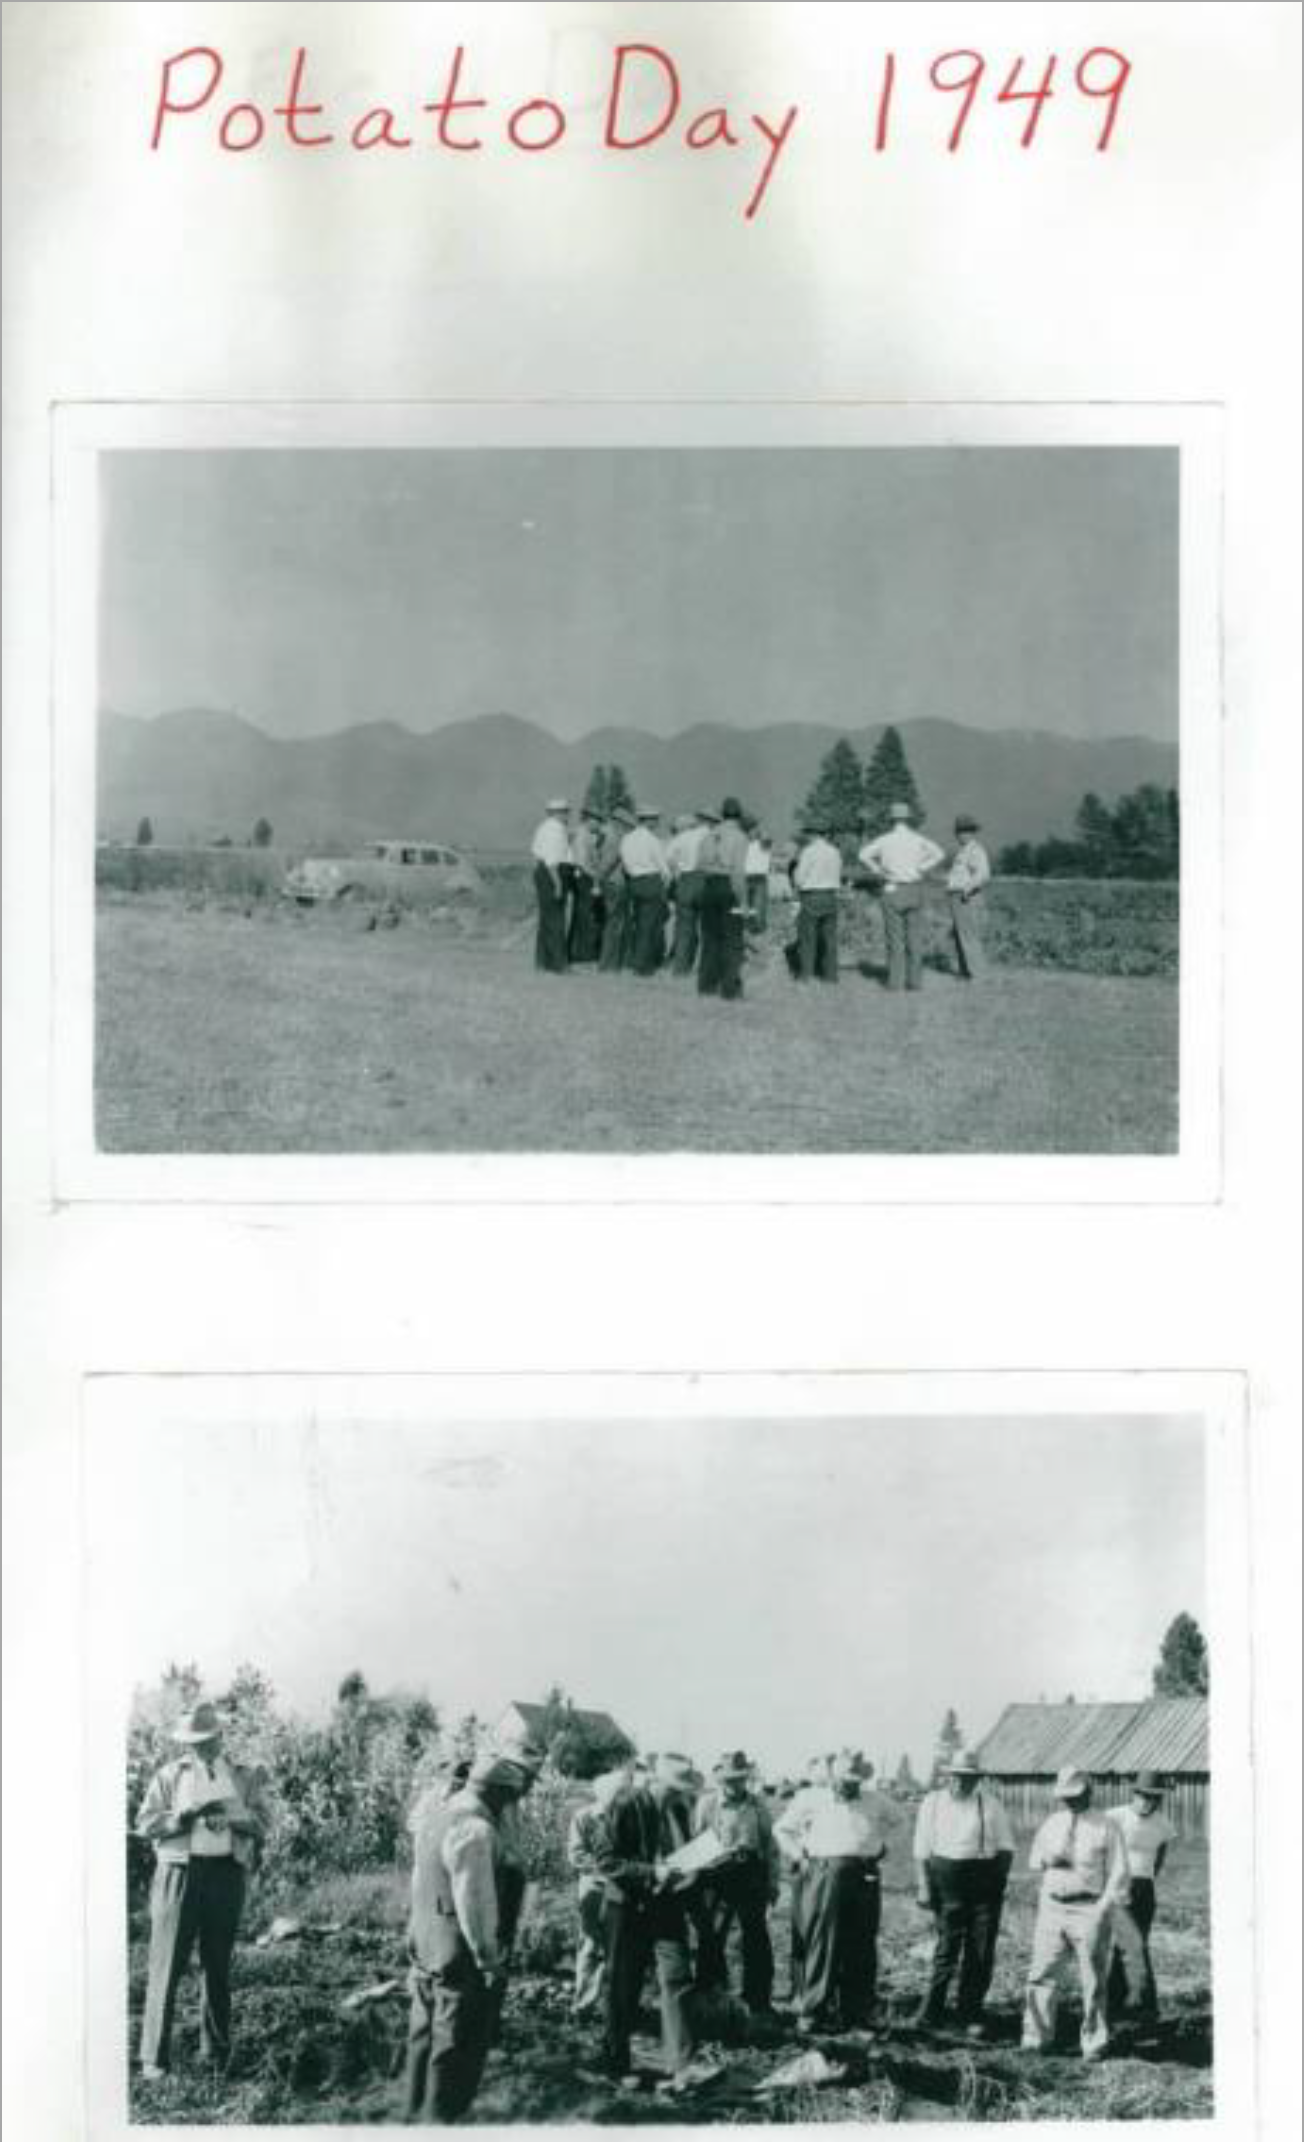 Potato Harvest at NWARC in 1949